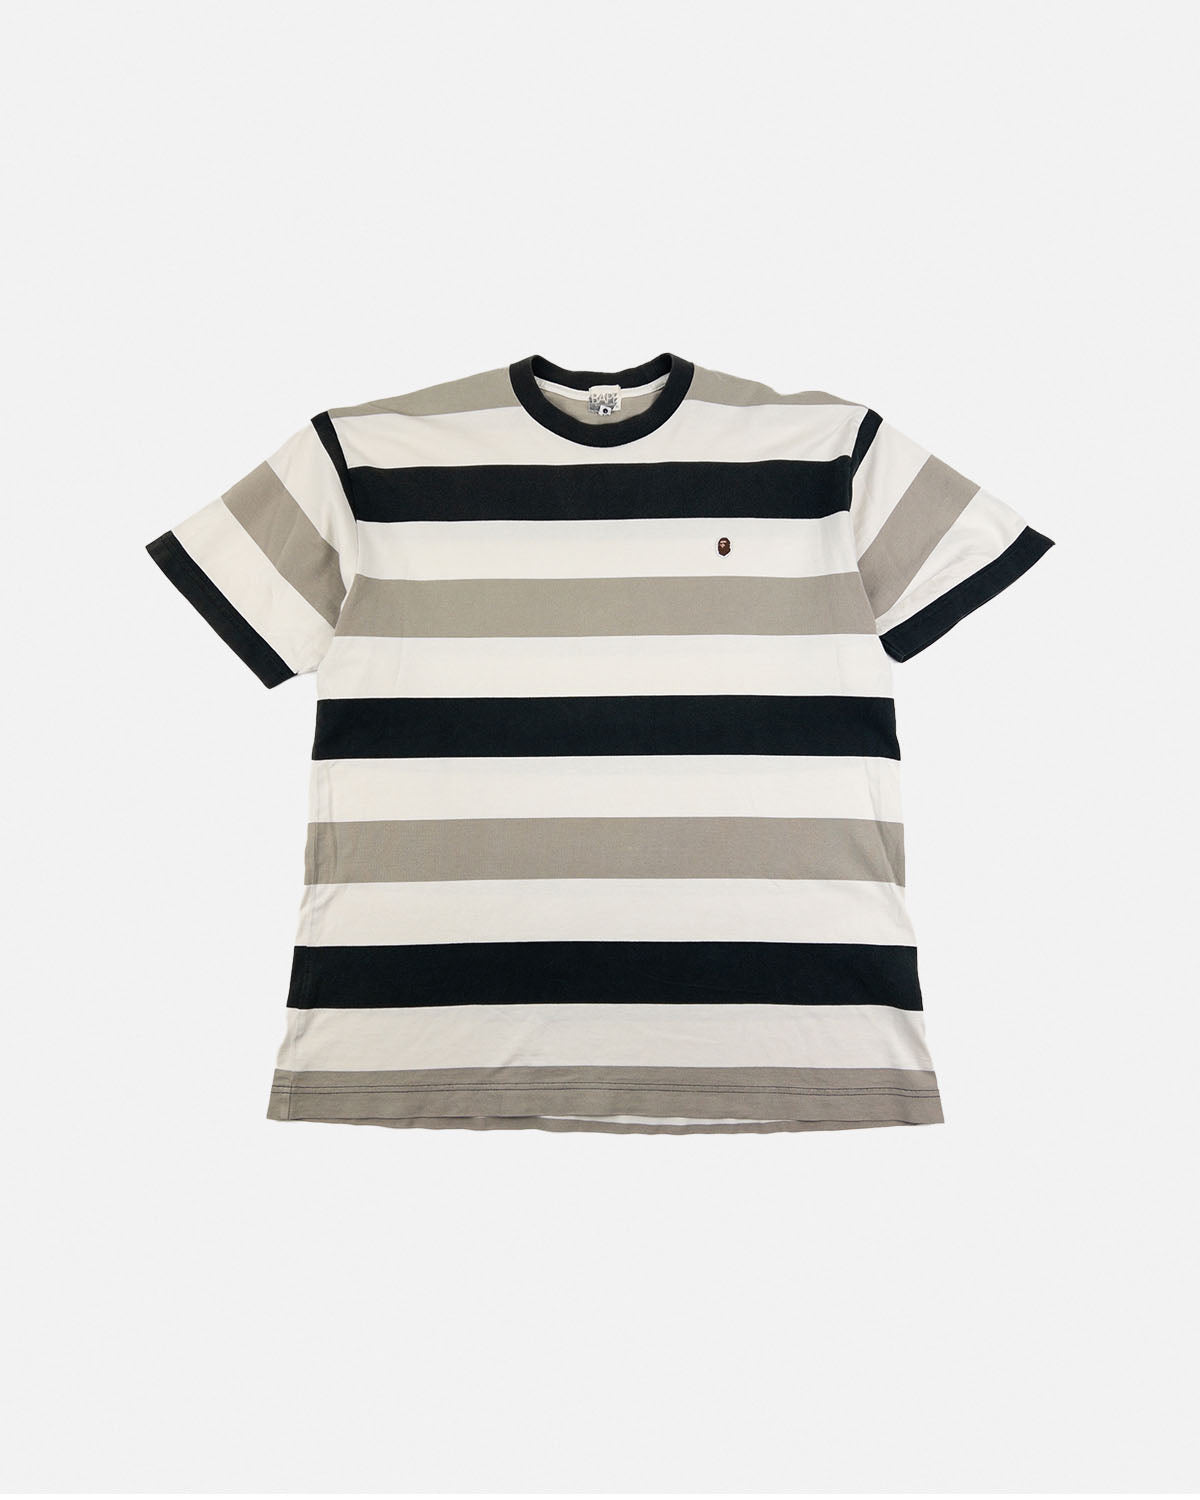 Bape Black/Tan/White Horizontal Striped T-Shirt